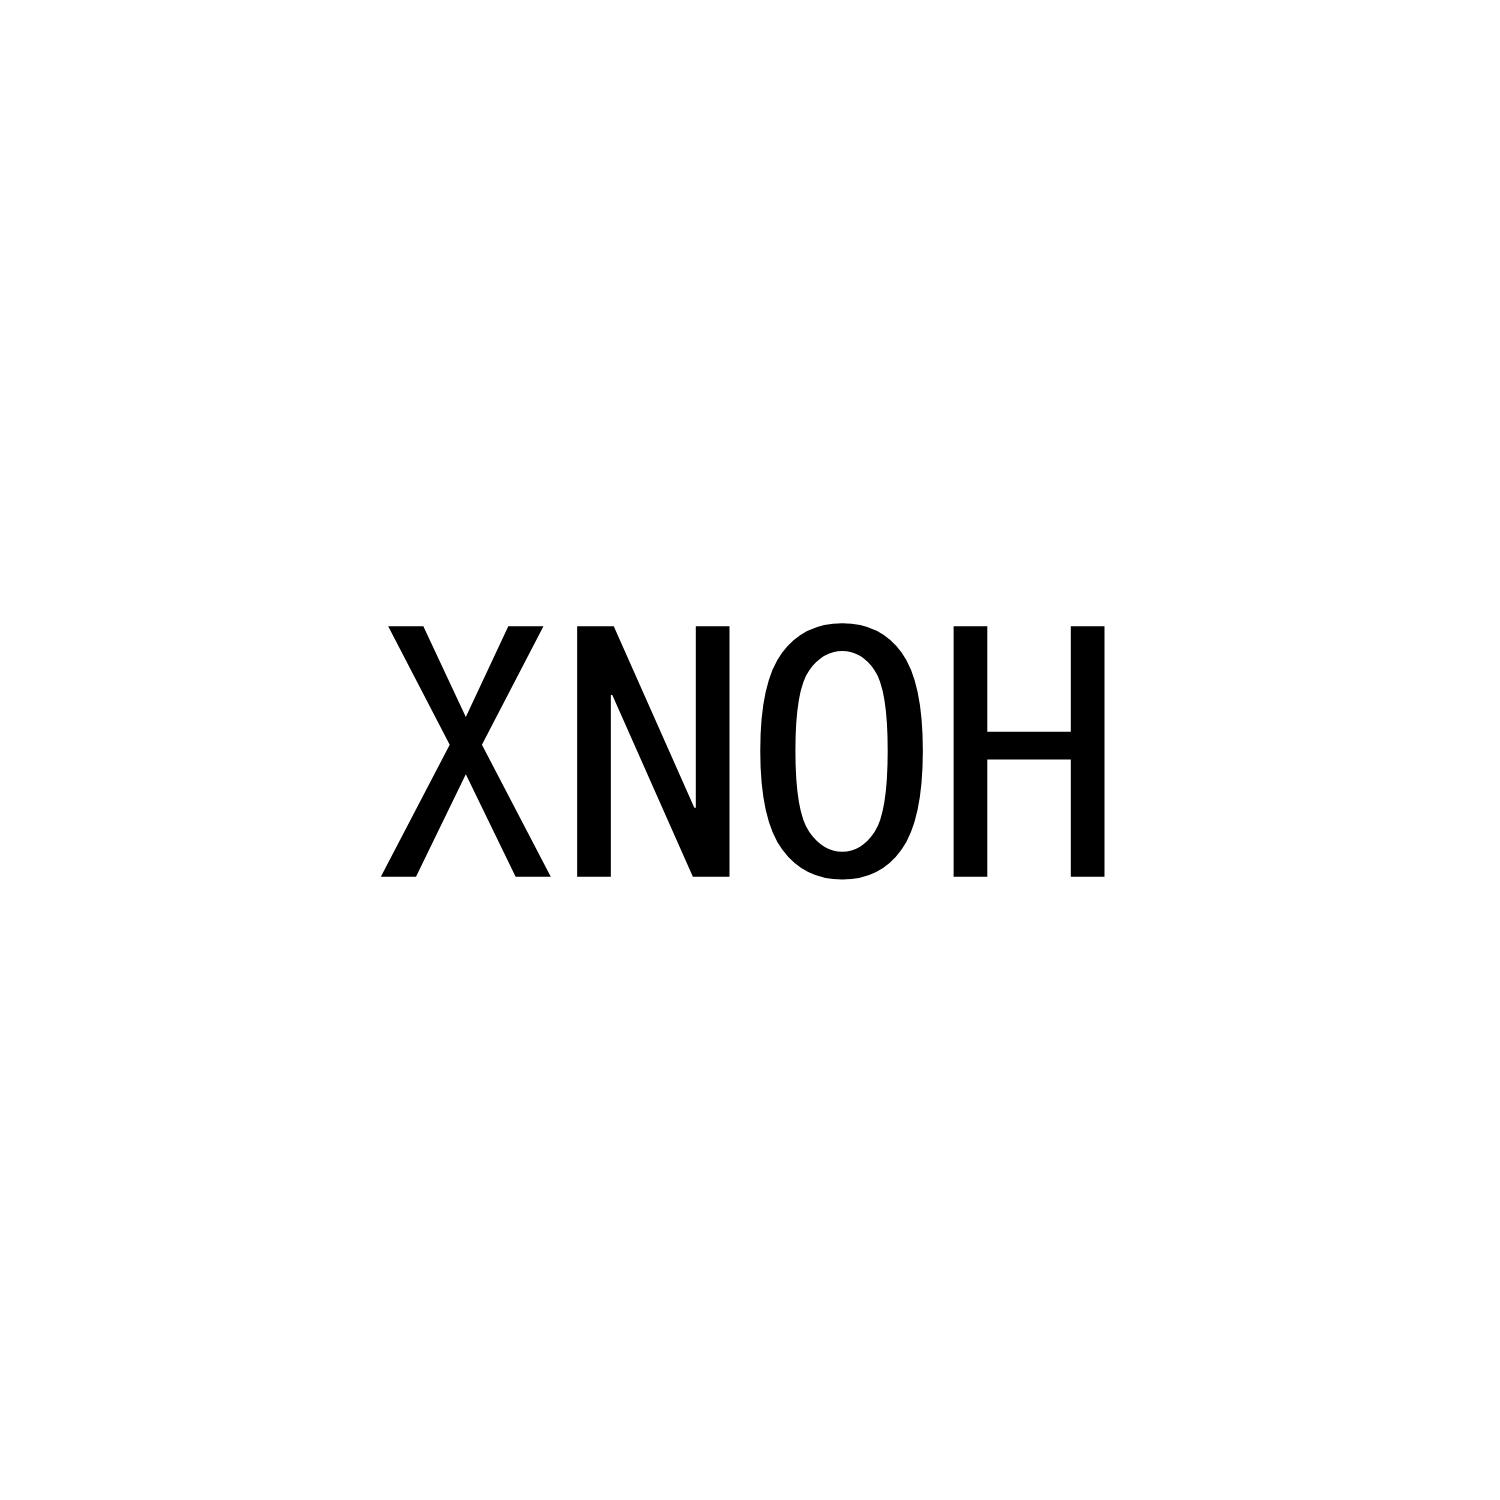 XNOH